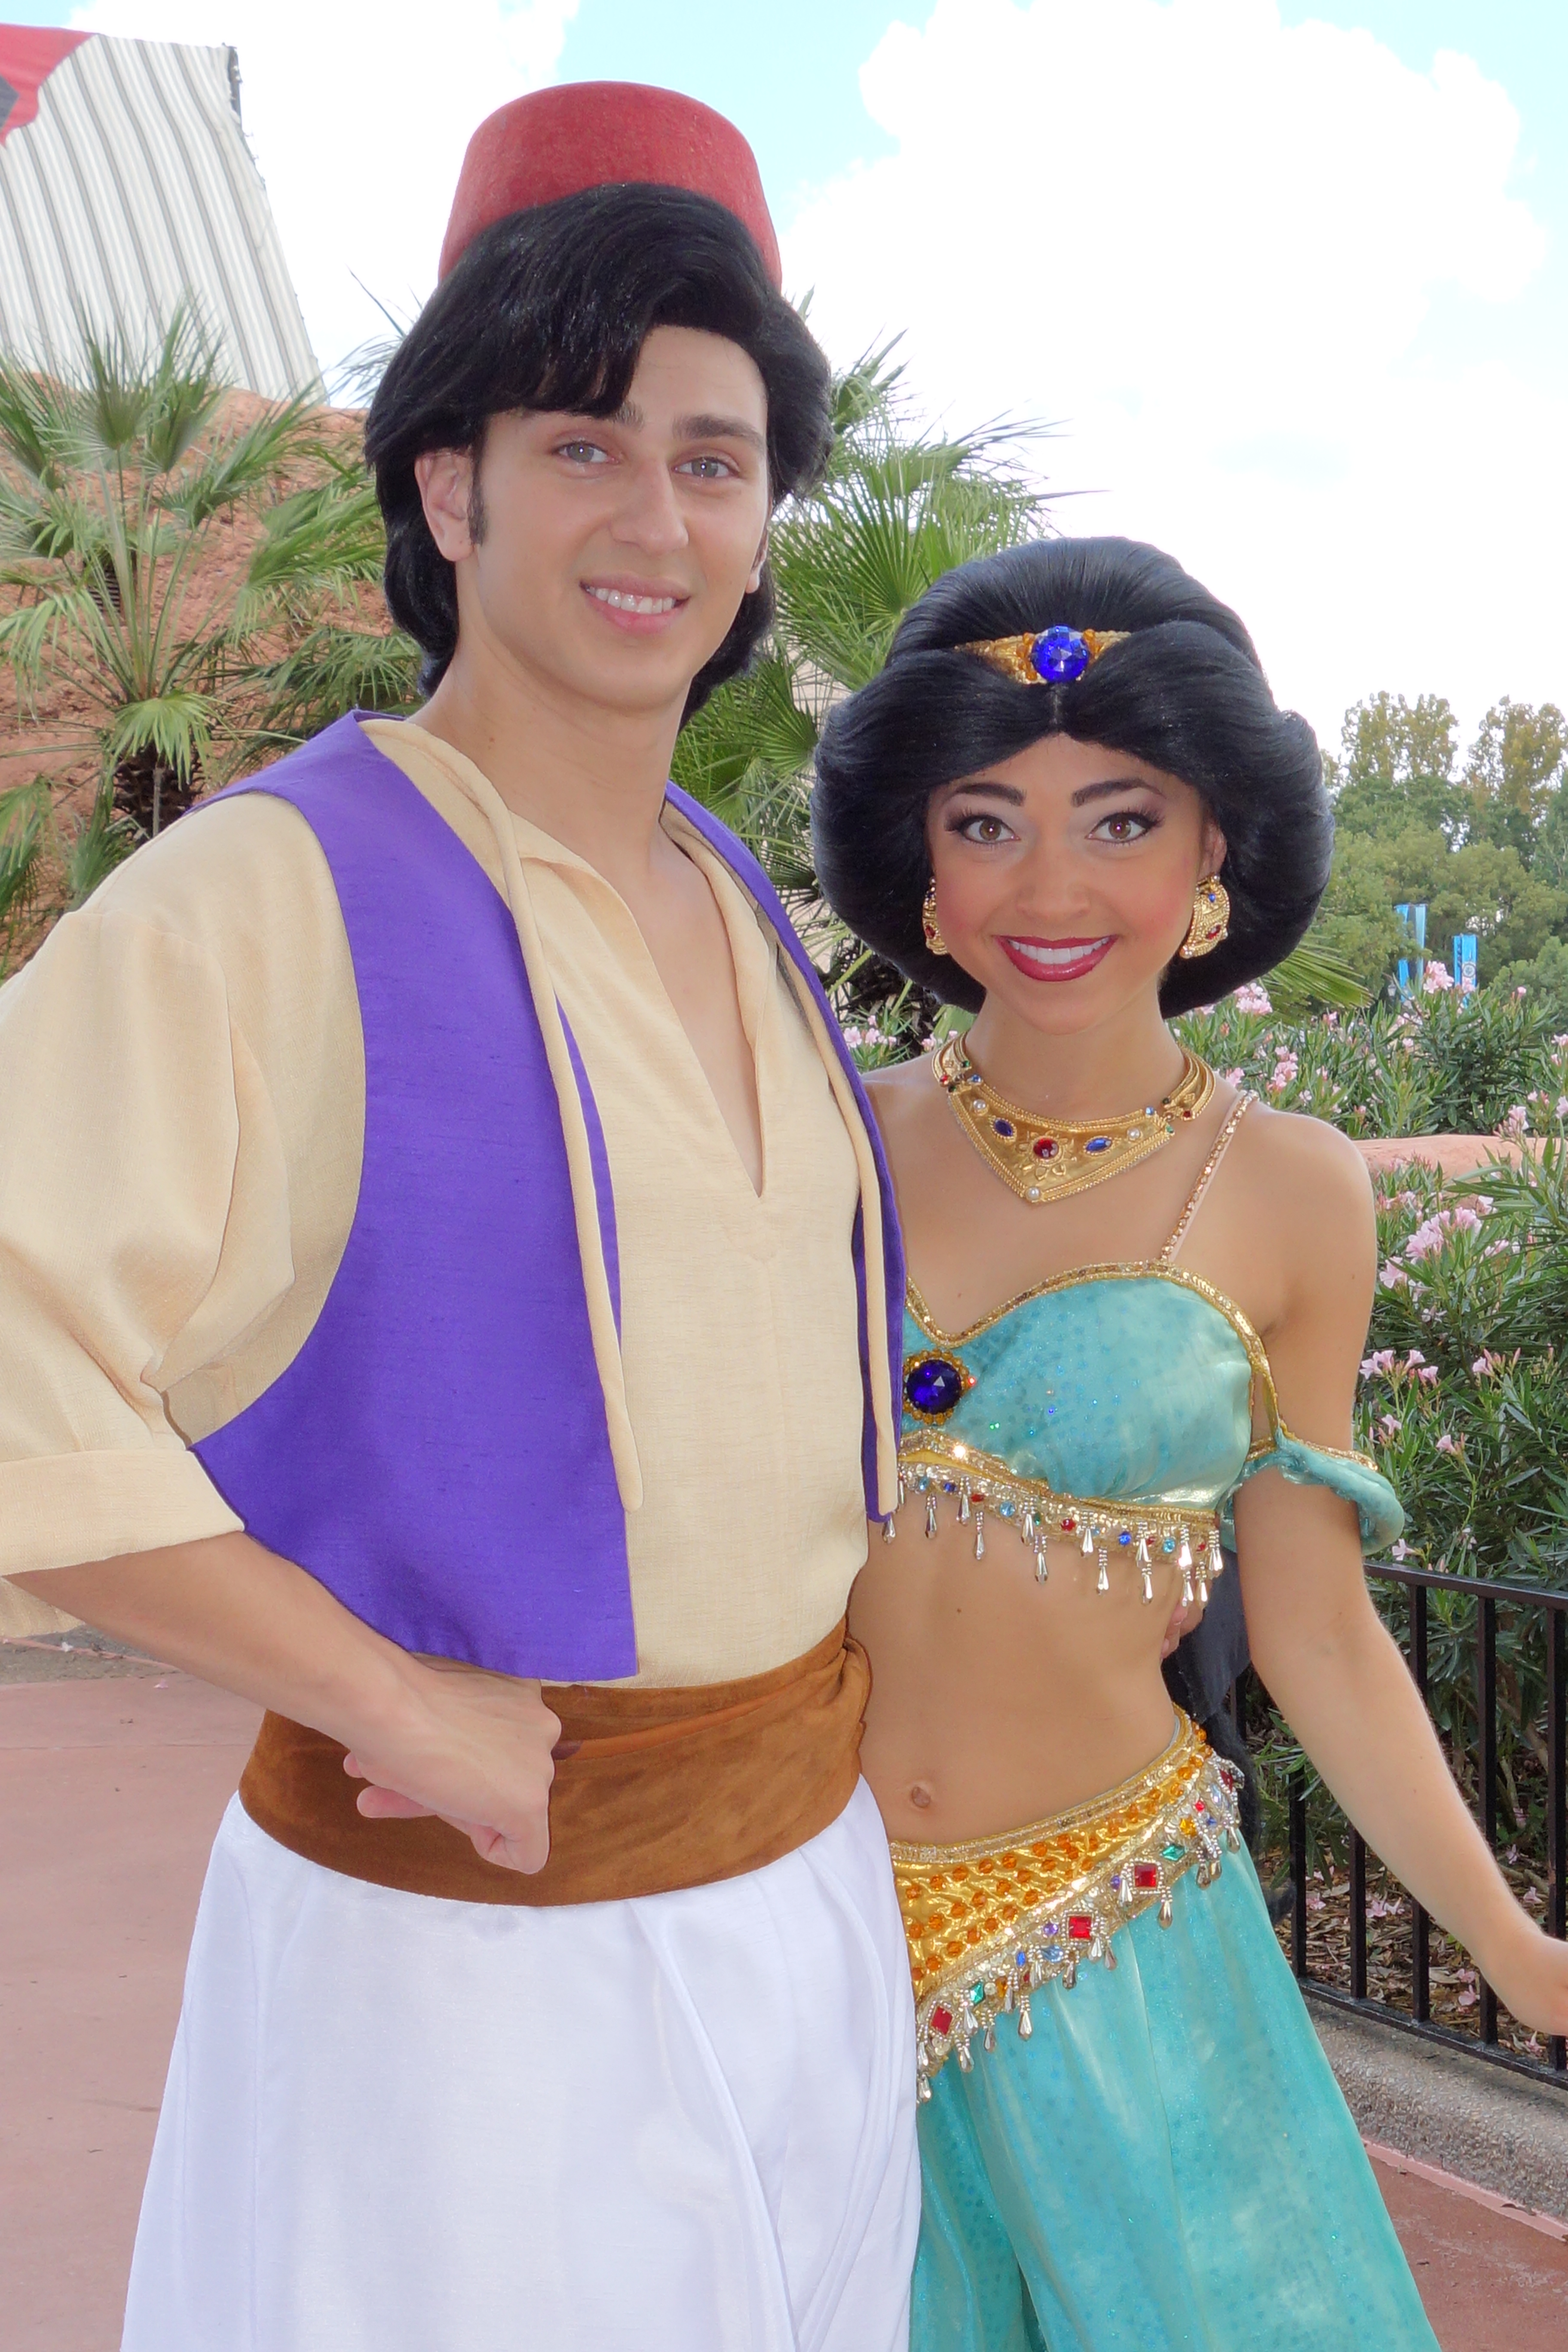 Aladdin and Jasmine at Morocco in EPCOT 2012